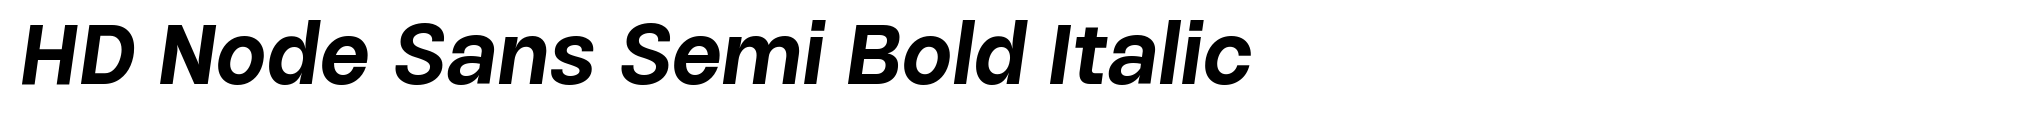 HD Node Sans Semi Bold Italic image